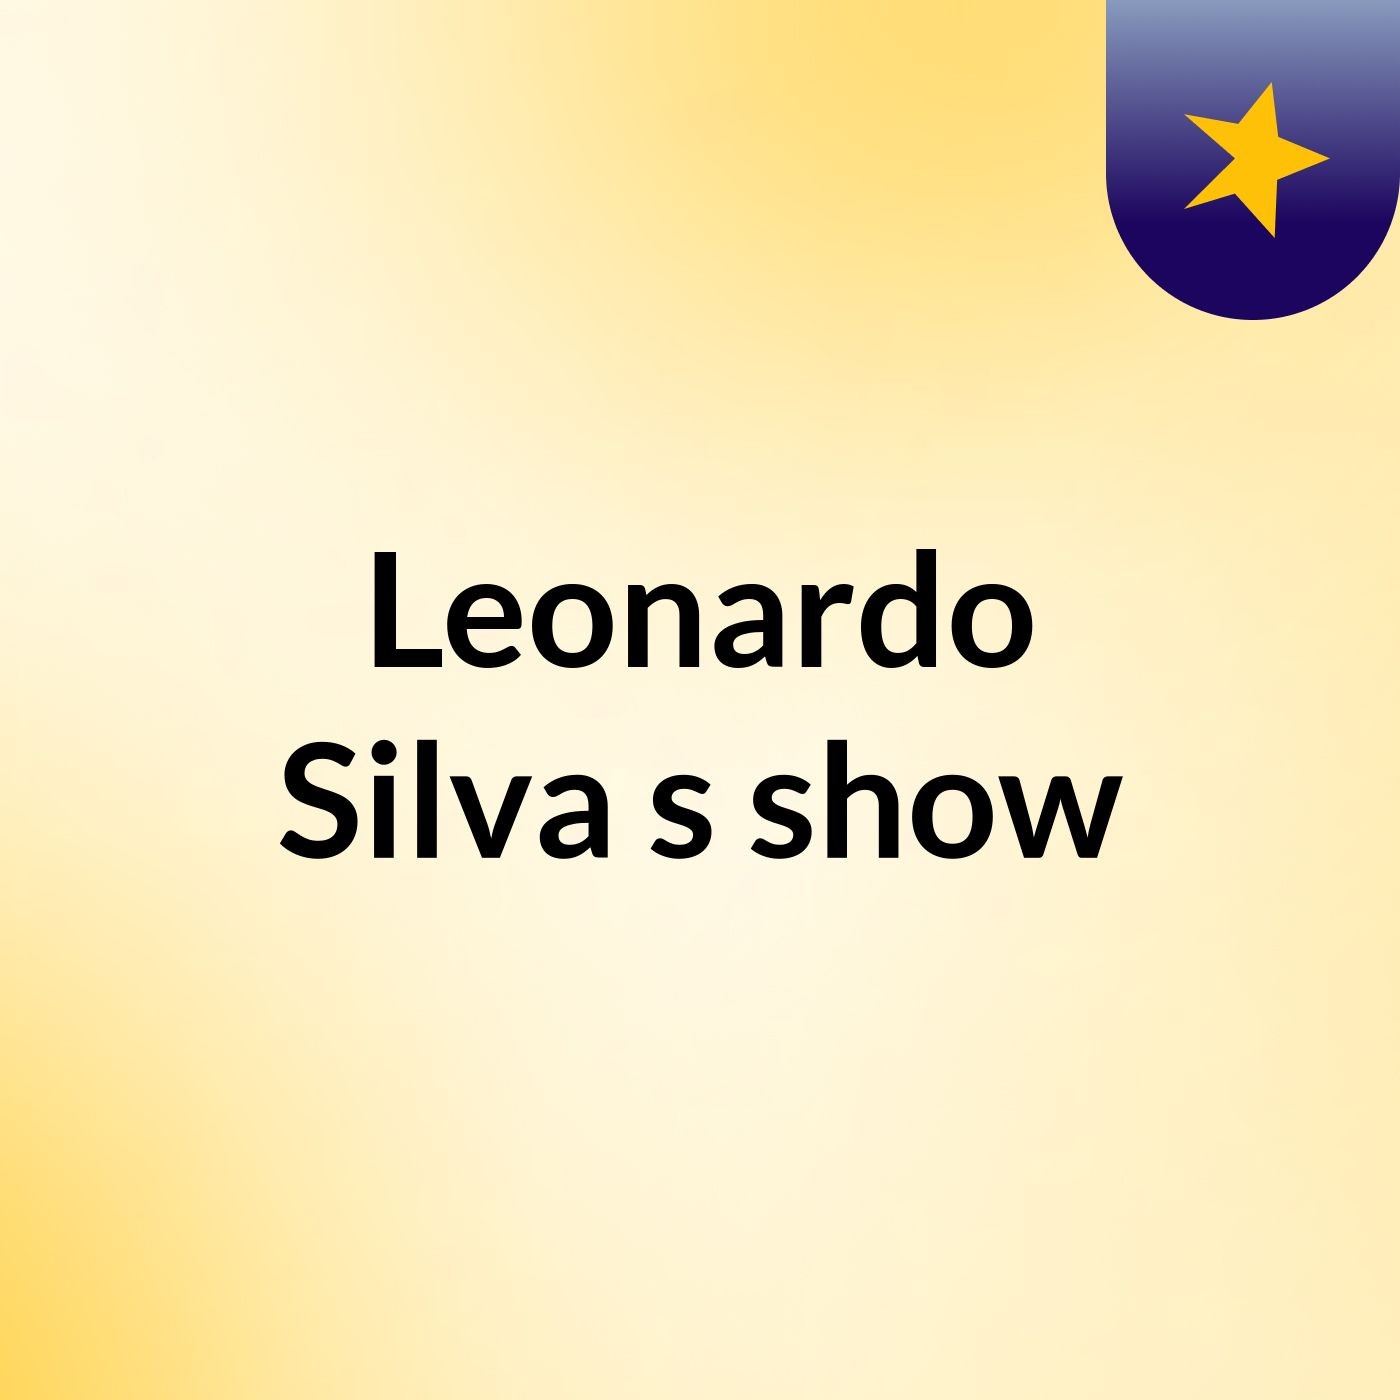 Leonardo Silva's show